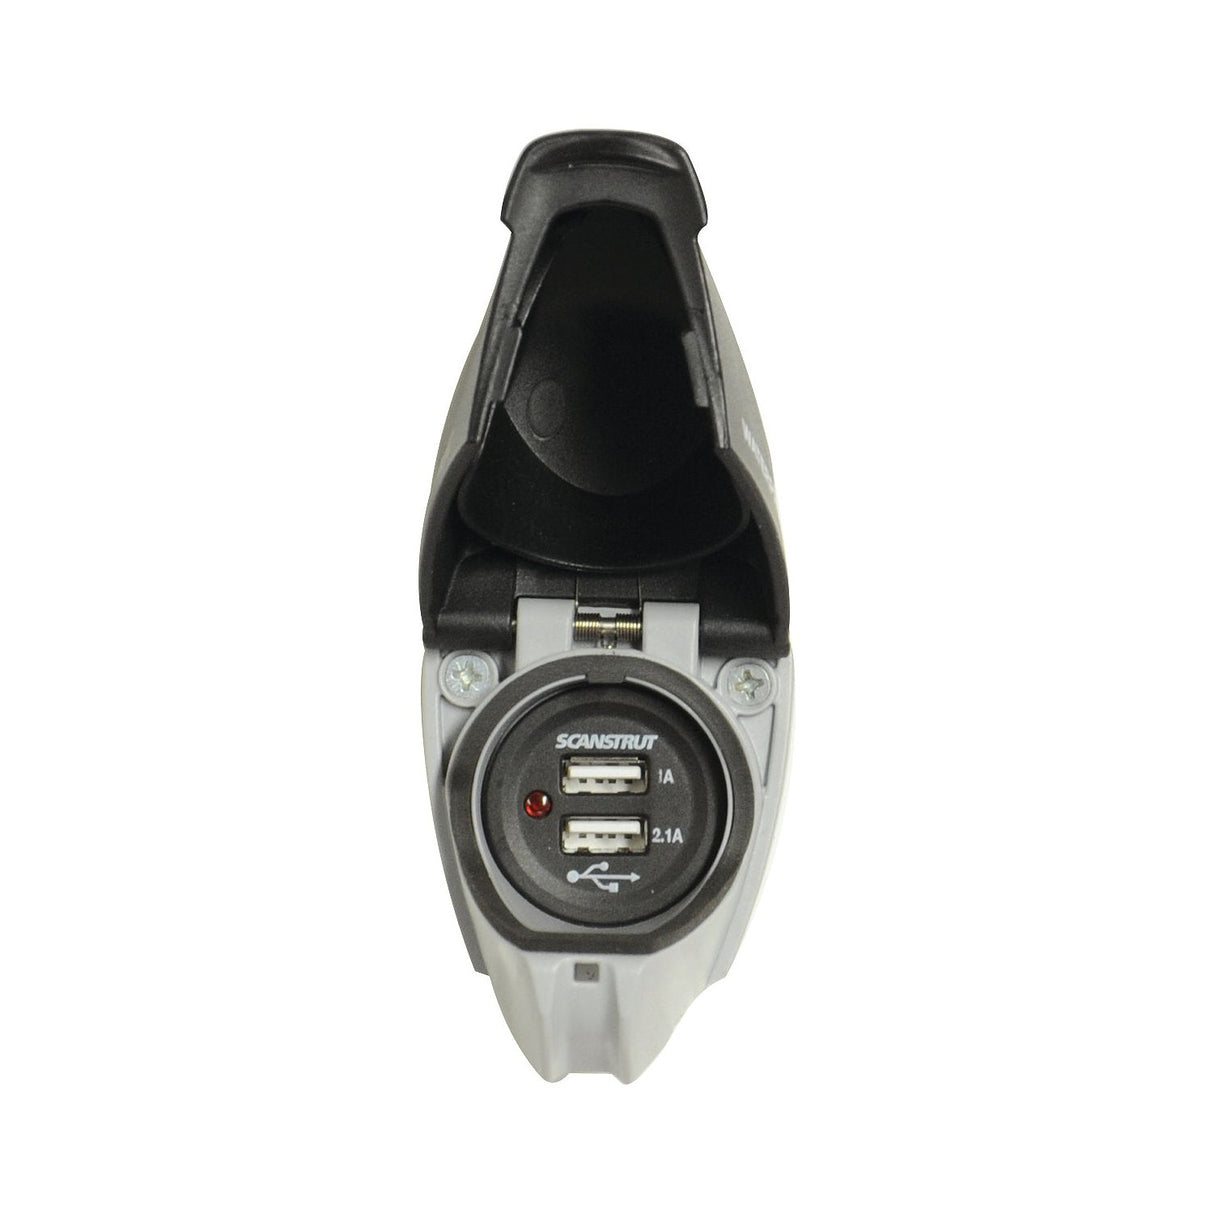 ROKK™ Mini Waterproof USB Dual Charge Socket (12-24V)
 - S.119838 - Farming Parts